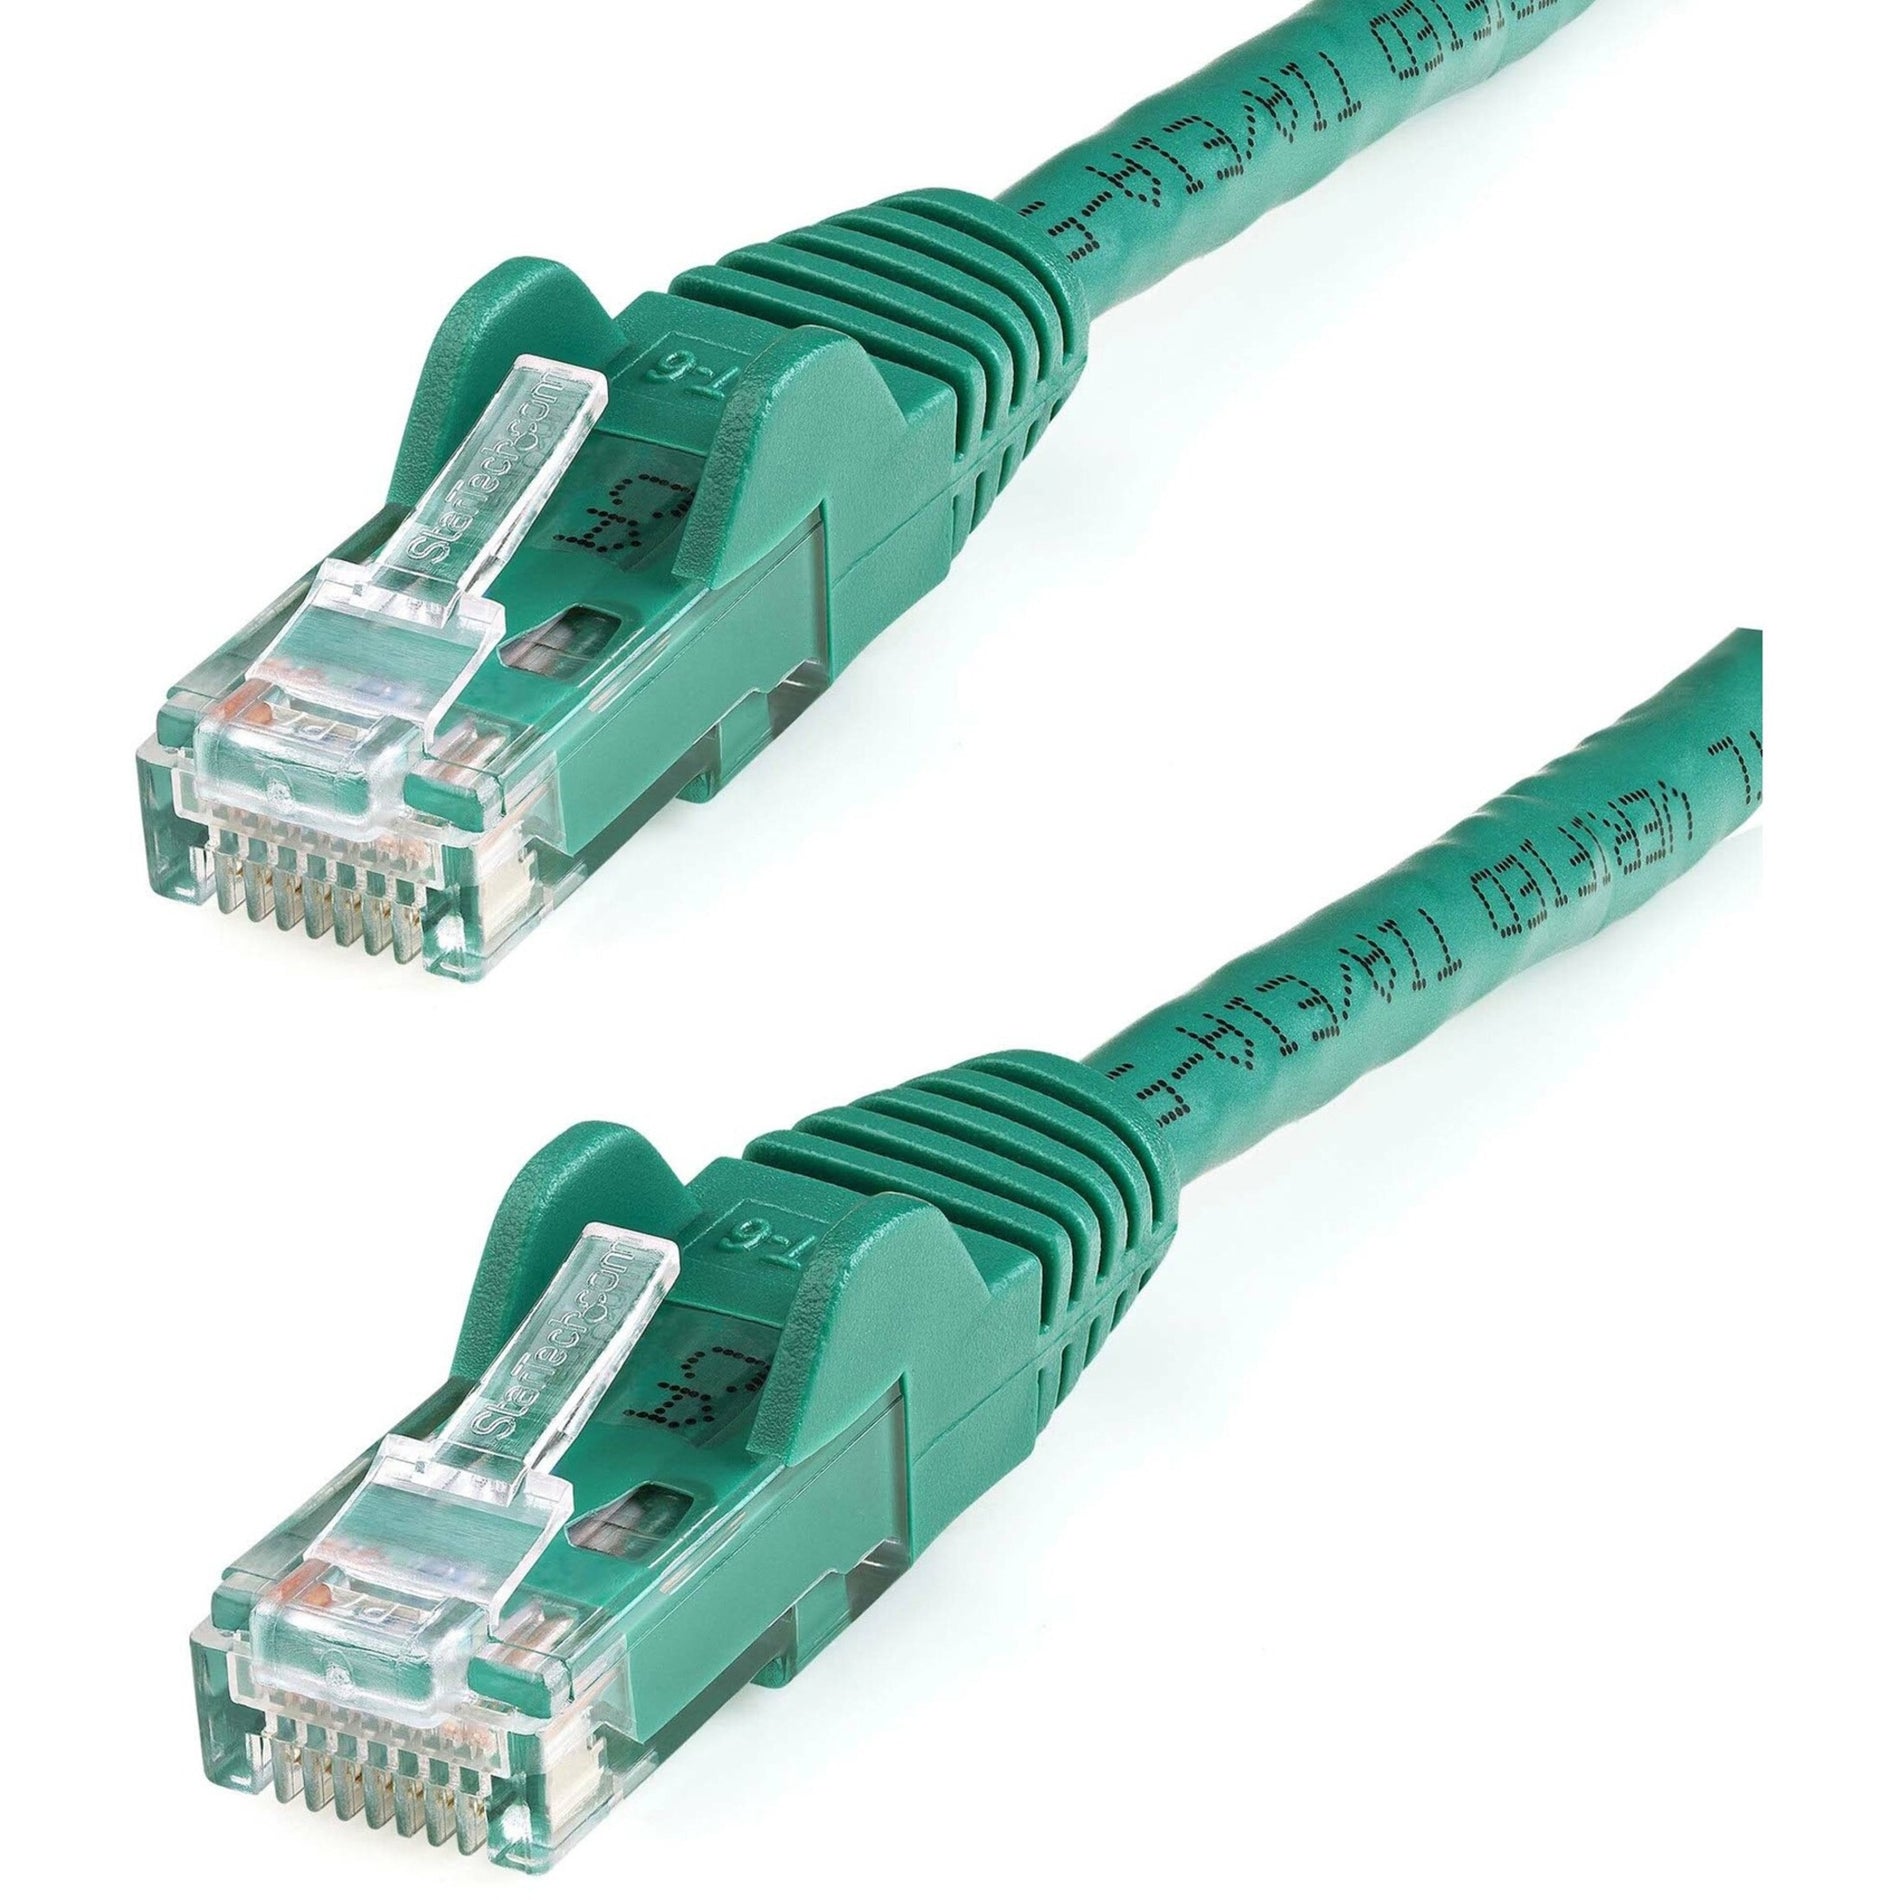 StarTech.com N6PATCH7GN 7 ft Green Snagless Cat6 UTP Patch Cable, Lifetime Warranty, ETL Verified, 10 Gbit/s Data Transfer Rate